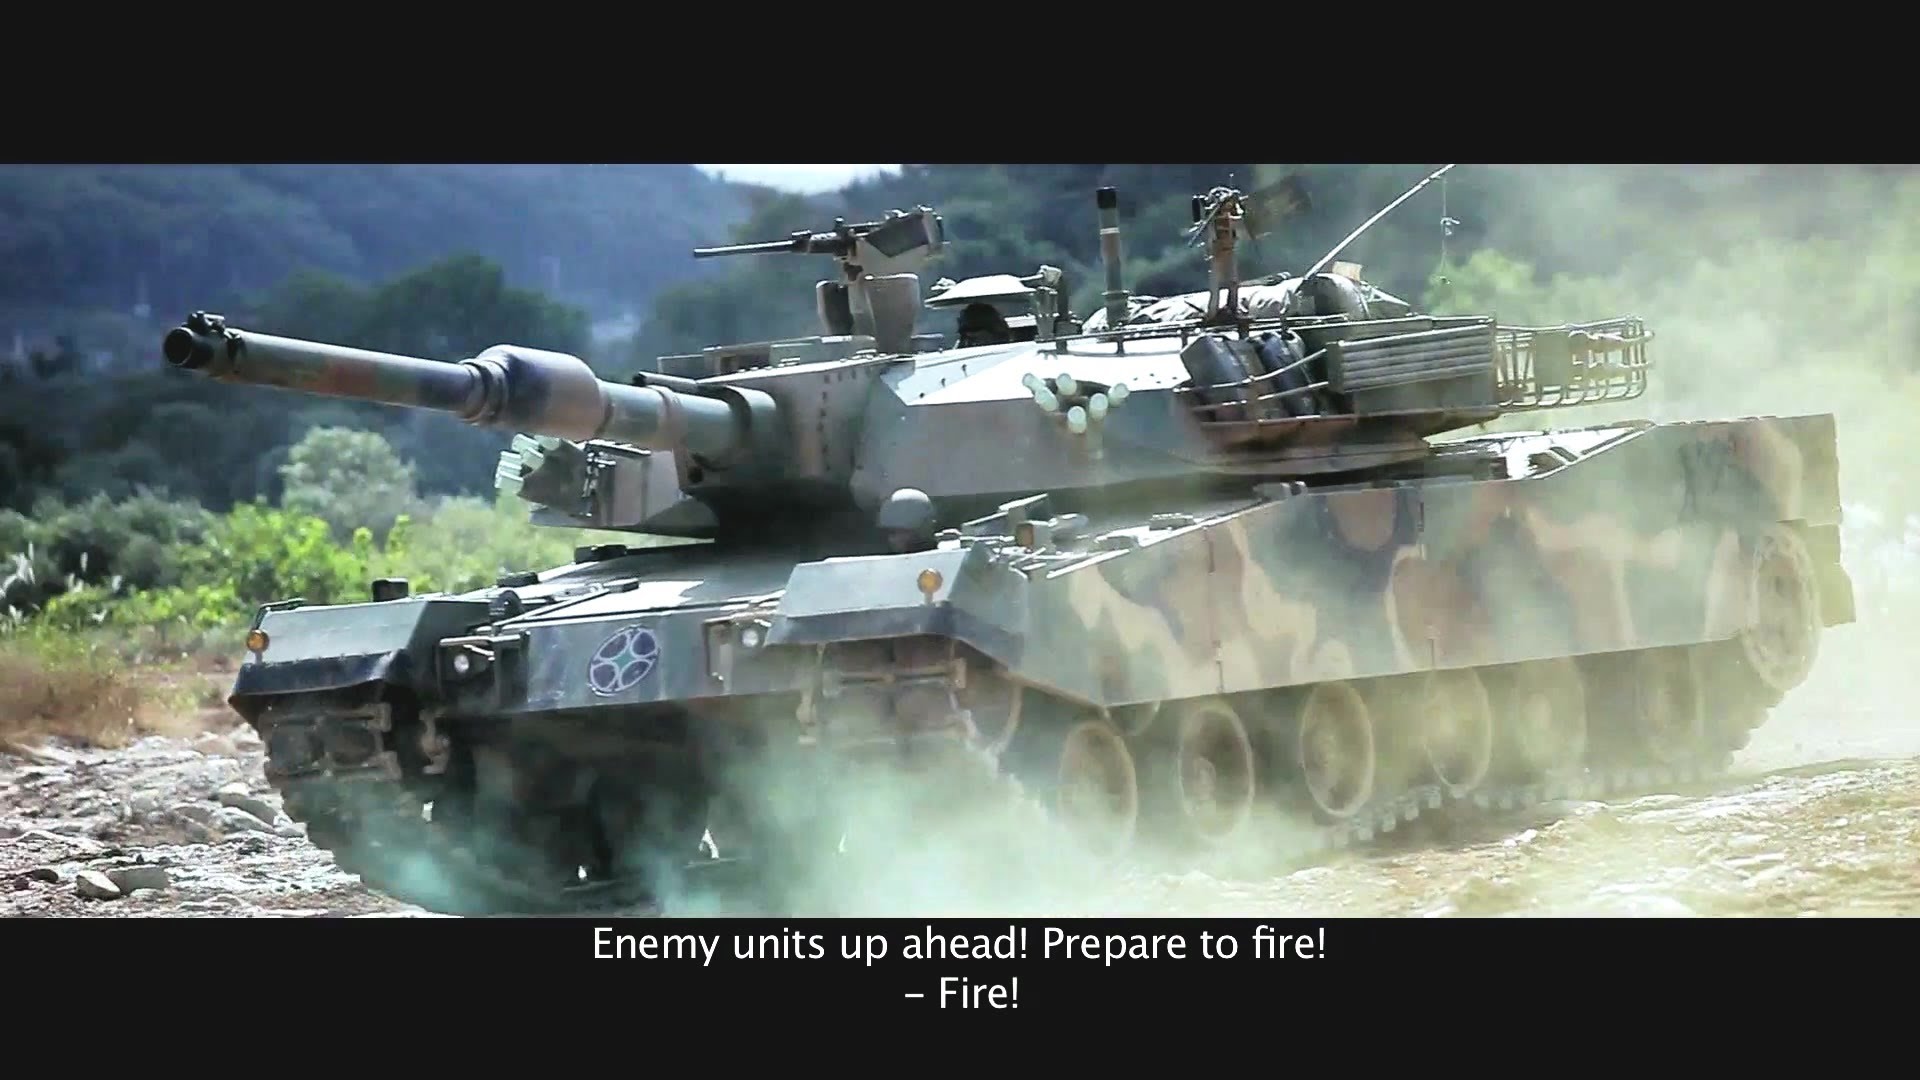 Republic Of Korea Army - Final Battle Interactive Commercial Combat Simulation [1080p]